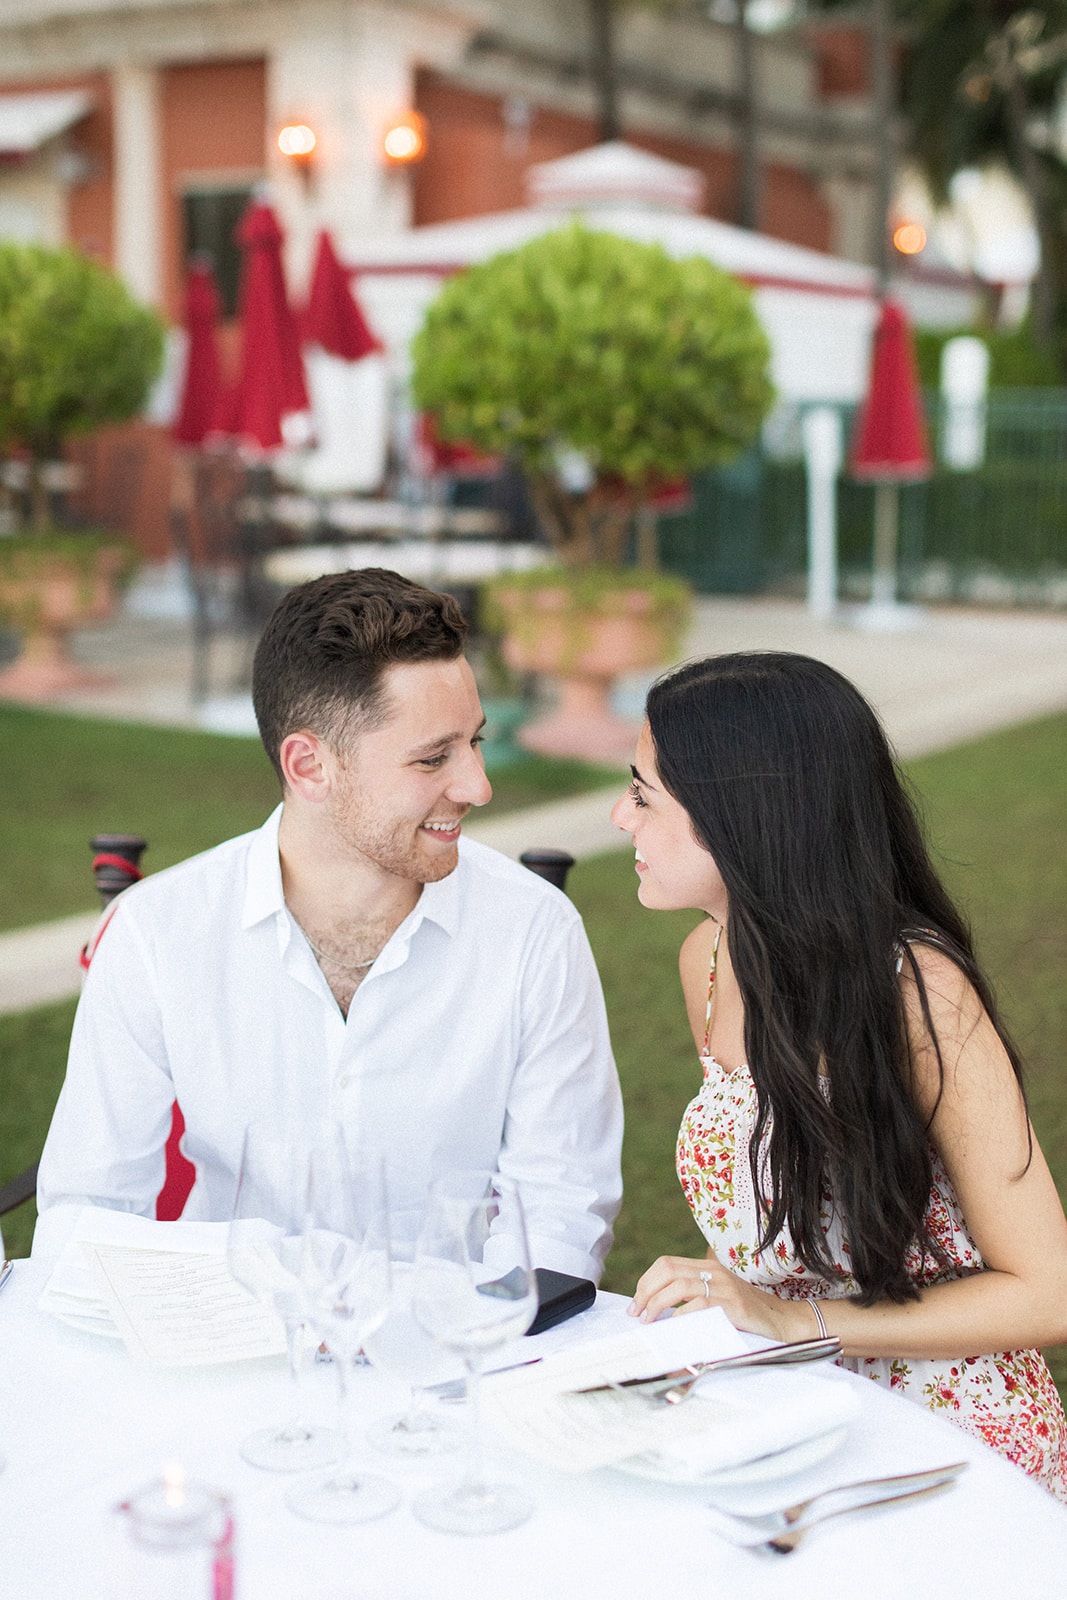 aqualina hotel miami beach sunny isles surprise wedding proposal 